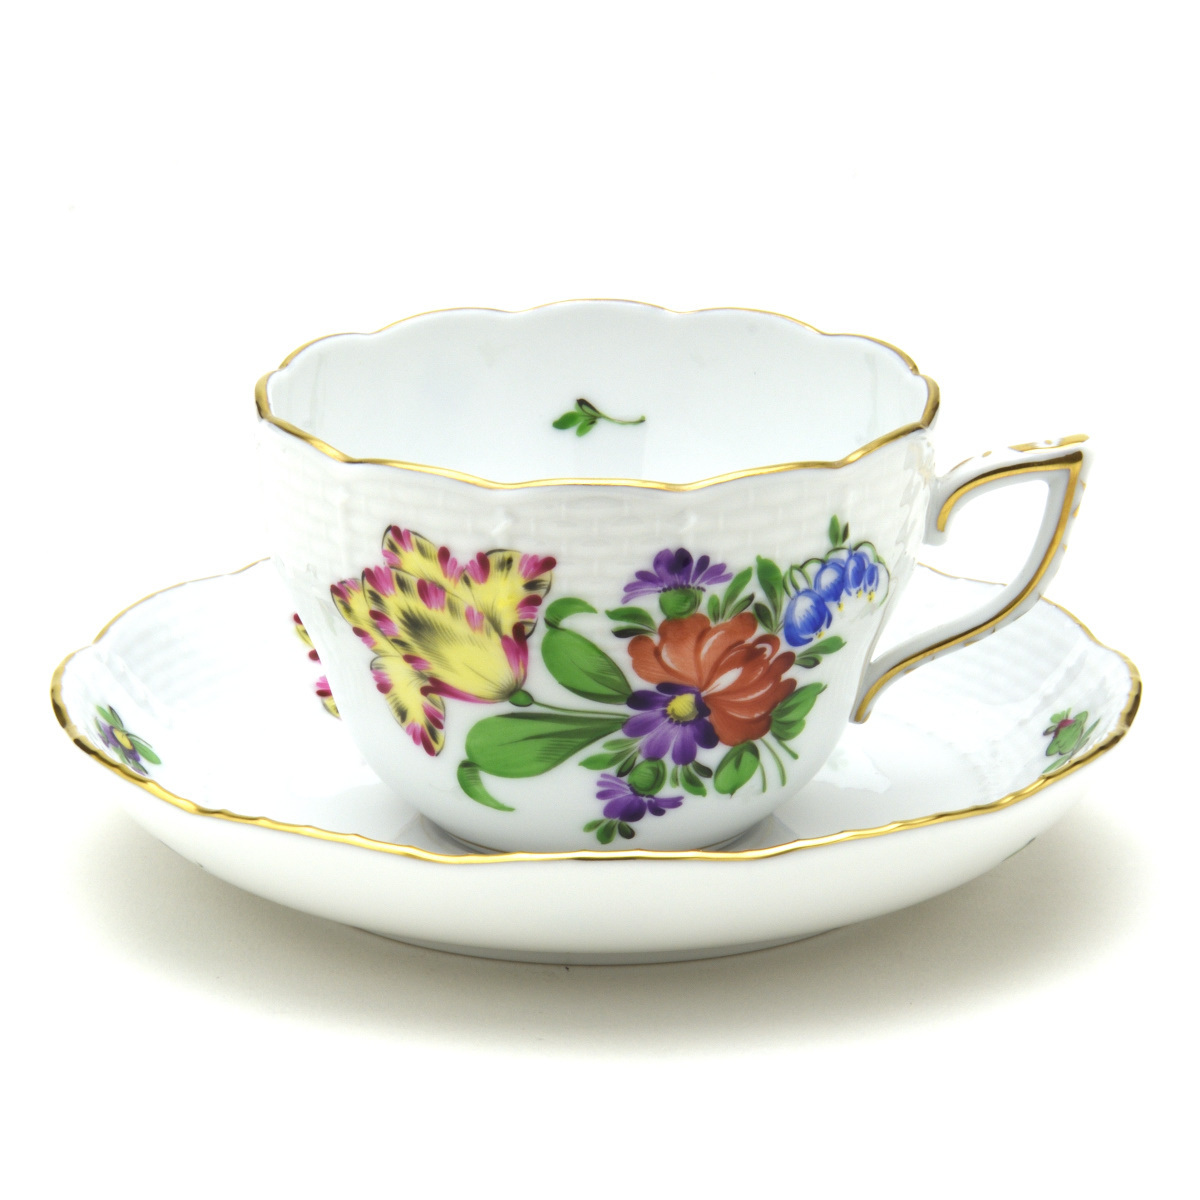 Herend Taza multiusos y platillo Tulip Bouquet (BT-5) Vajilla de porcelana pintada a mano Vajilla de taza de café/té hecha en Hungría Nuevo Herend, utensilios de té, taza y plato, café, Tanto para té como para té.